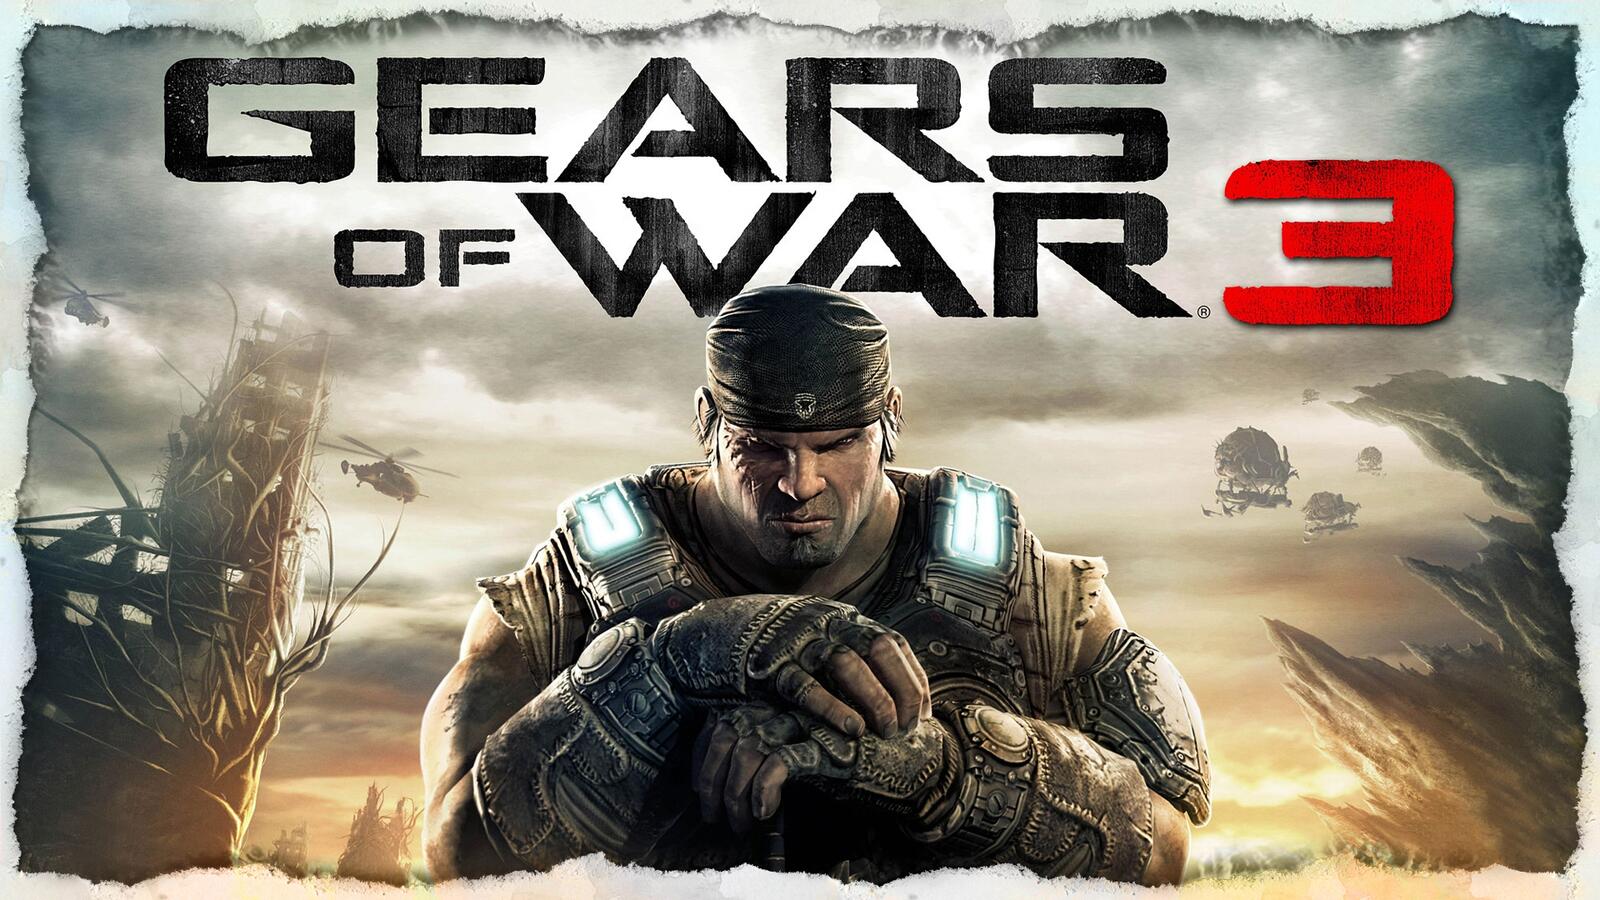 Wallpapers gears of war 3 marcus fenix video game on the desktop